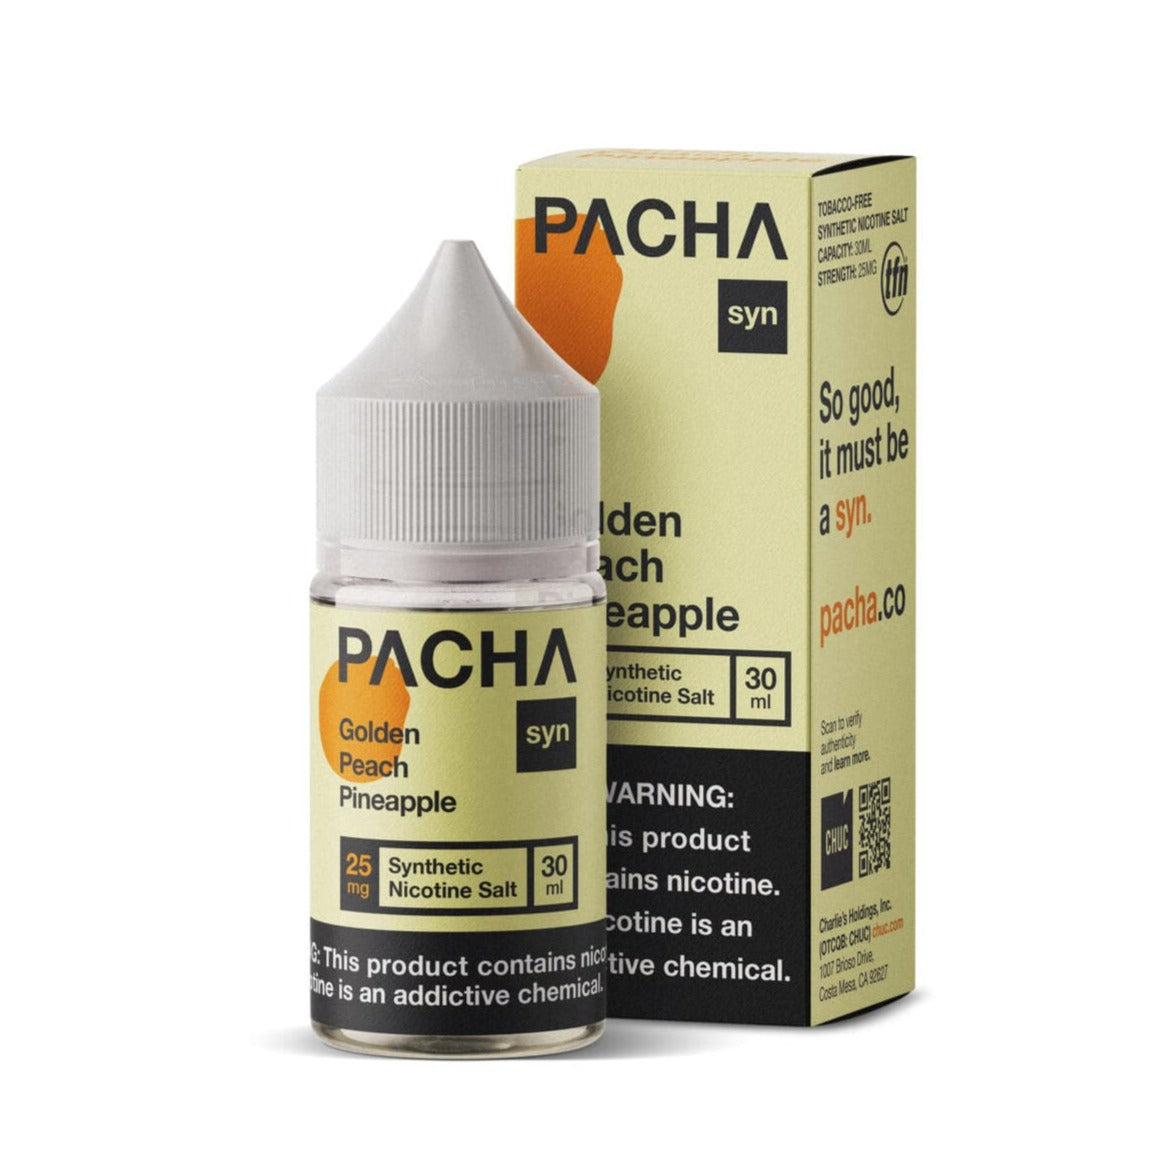 PACHA syn Golden Peach Pineapple 30ml Nic Salt Vape Juice - Pachamama